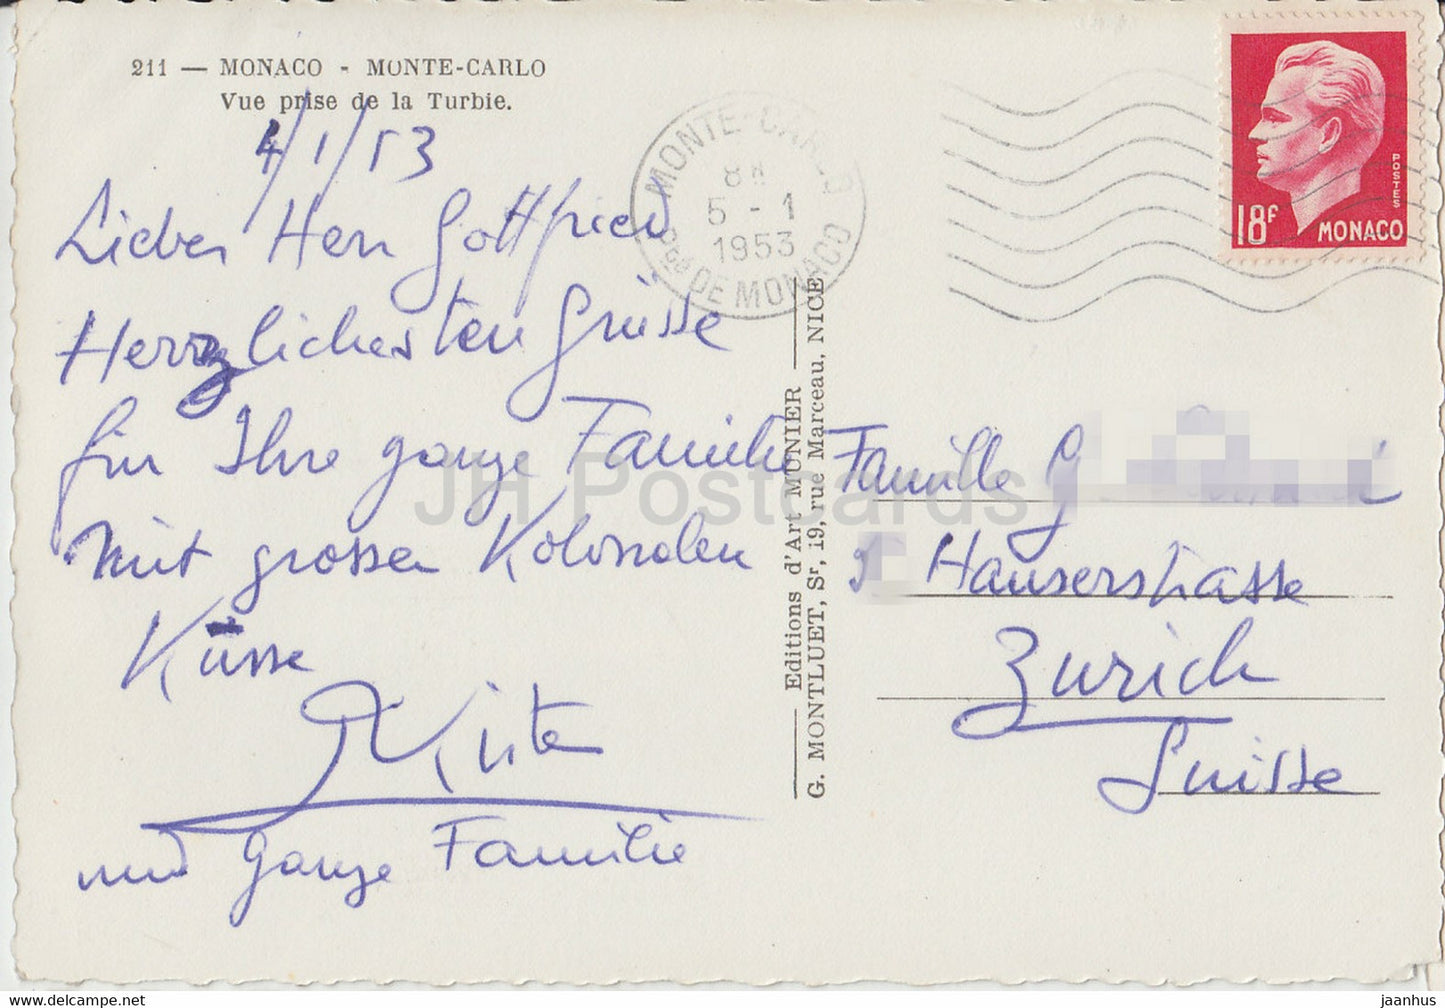 Monte Carlo - Vue prise de la Turbie - 211 - carte postale ancienne - 1953 - Monaco - occasion